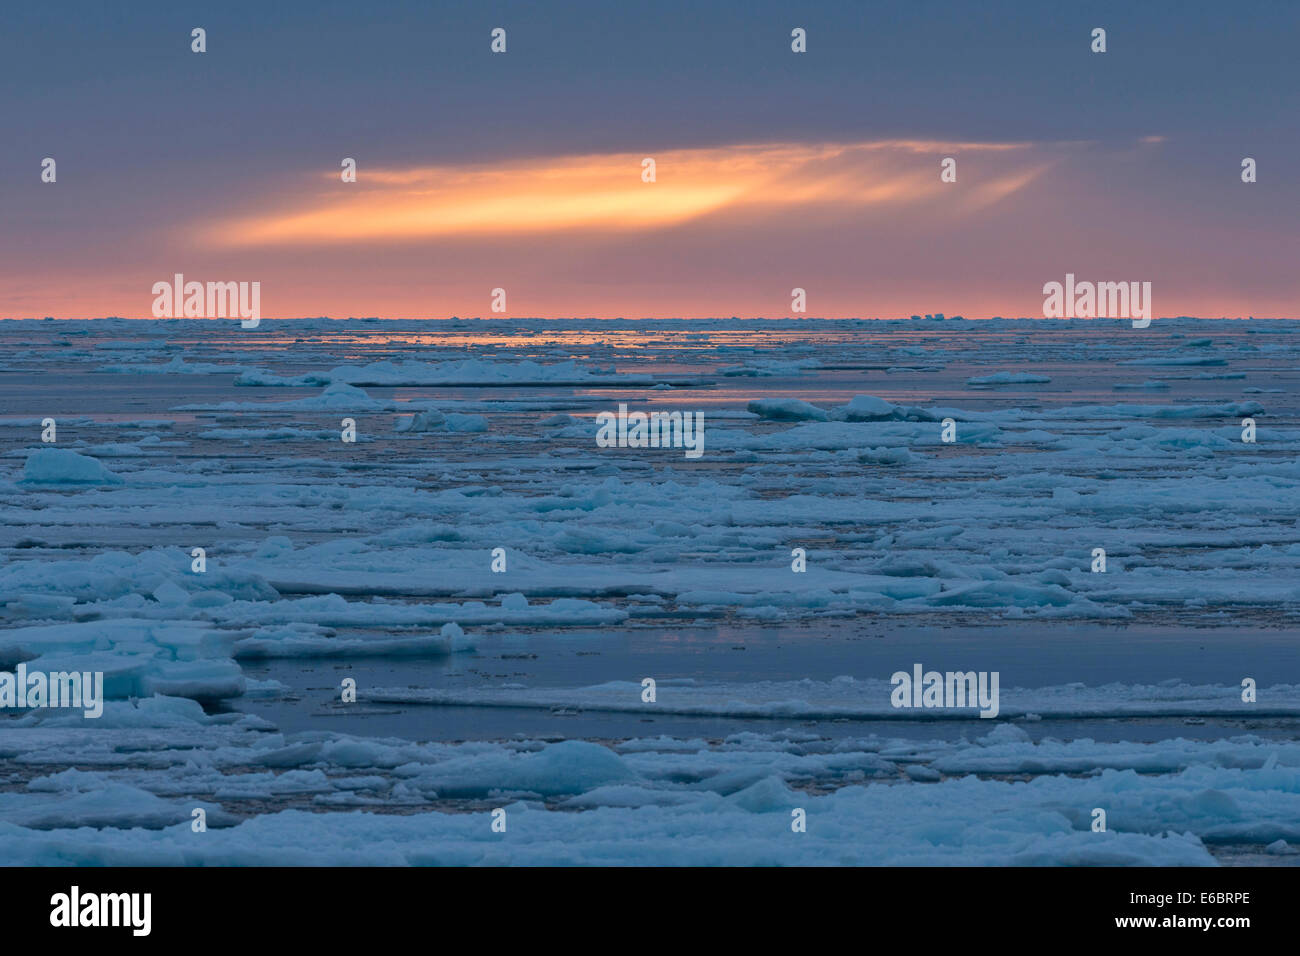 Ice floes, bordo della banchisa, Oceano Artico, Spitsbergen, isole Svalbard Isole Svalbard e Jan Mayen, Norvegia Foto Stock